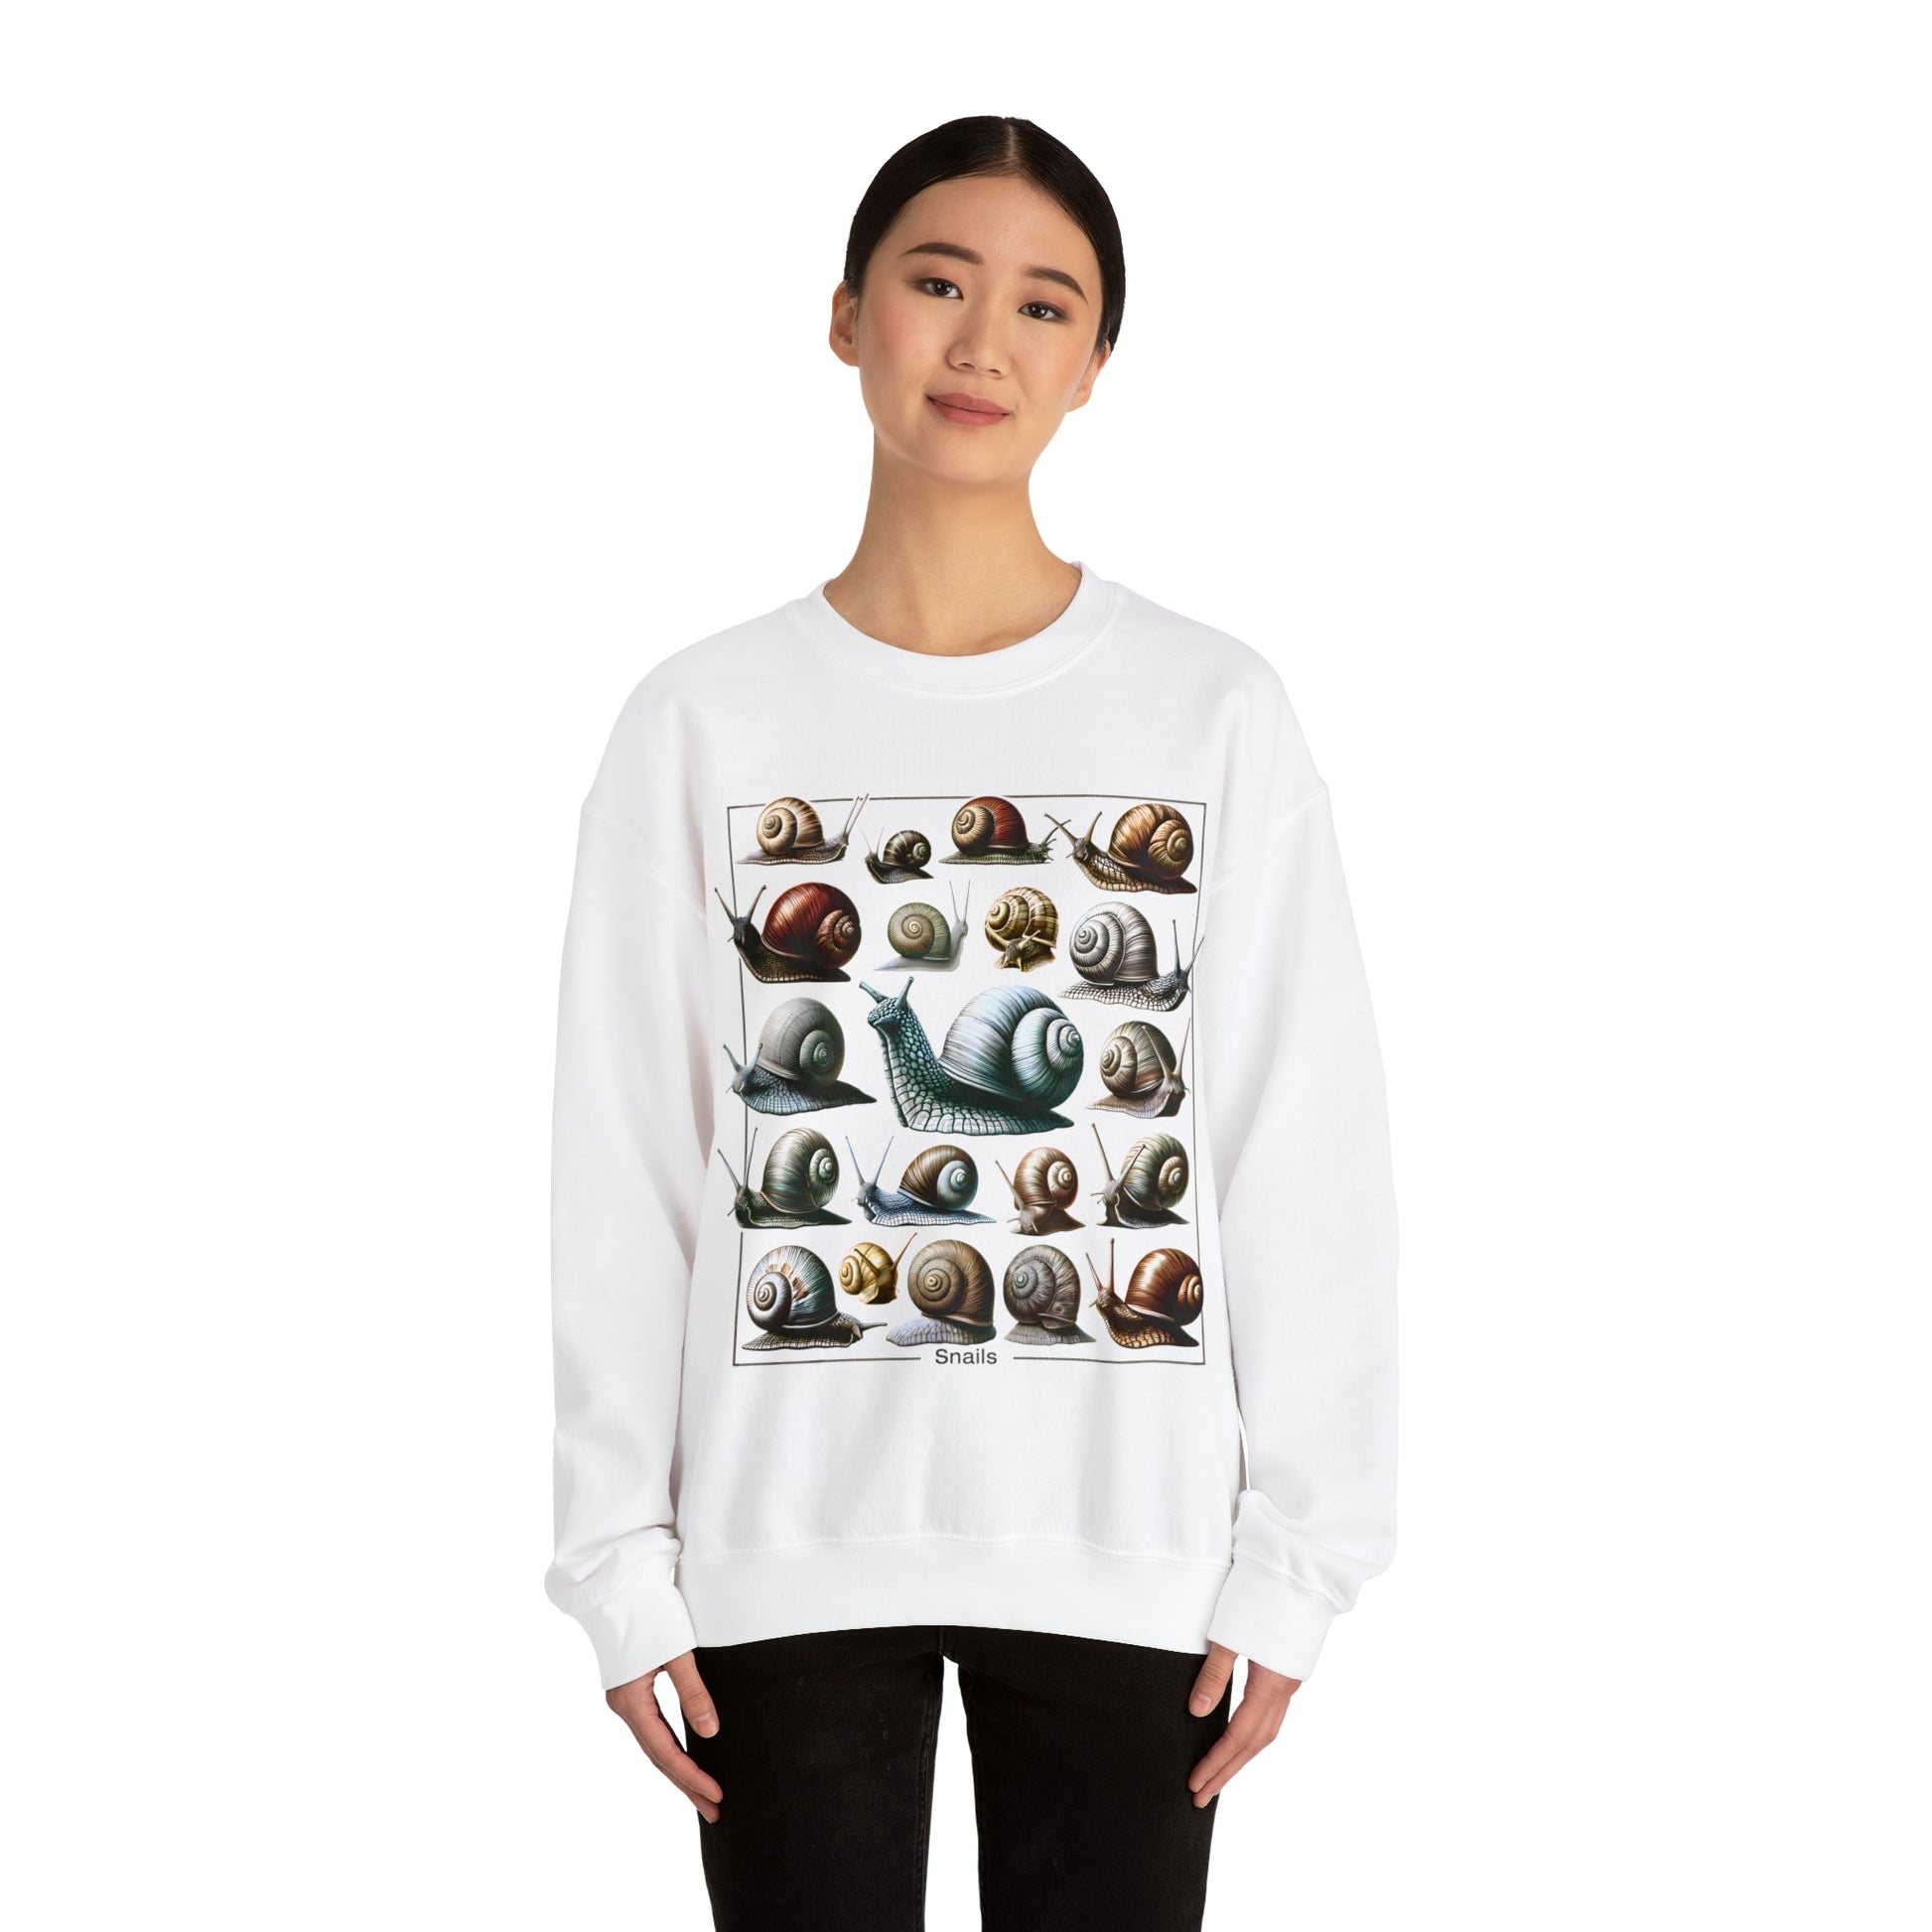 Art Nouveau Snail Girl Sweatshirt